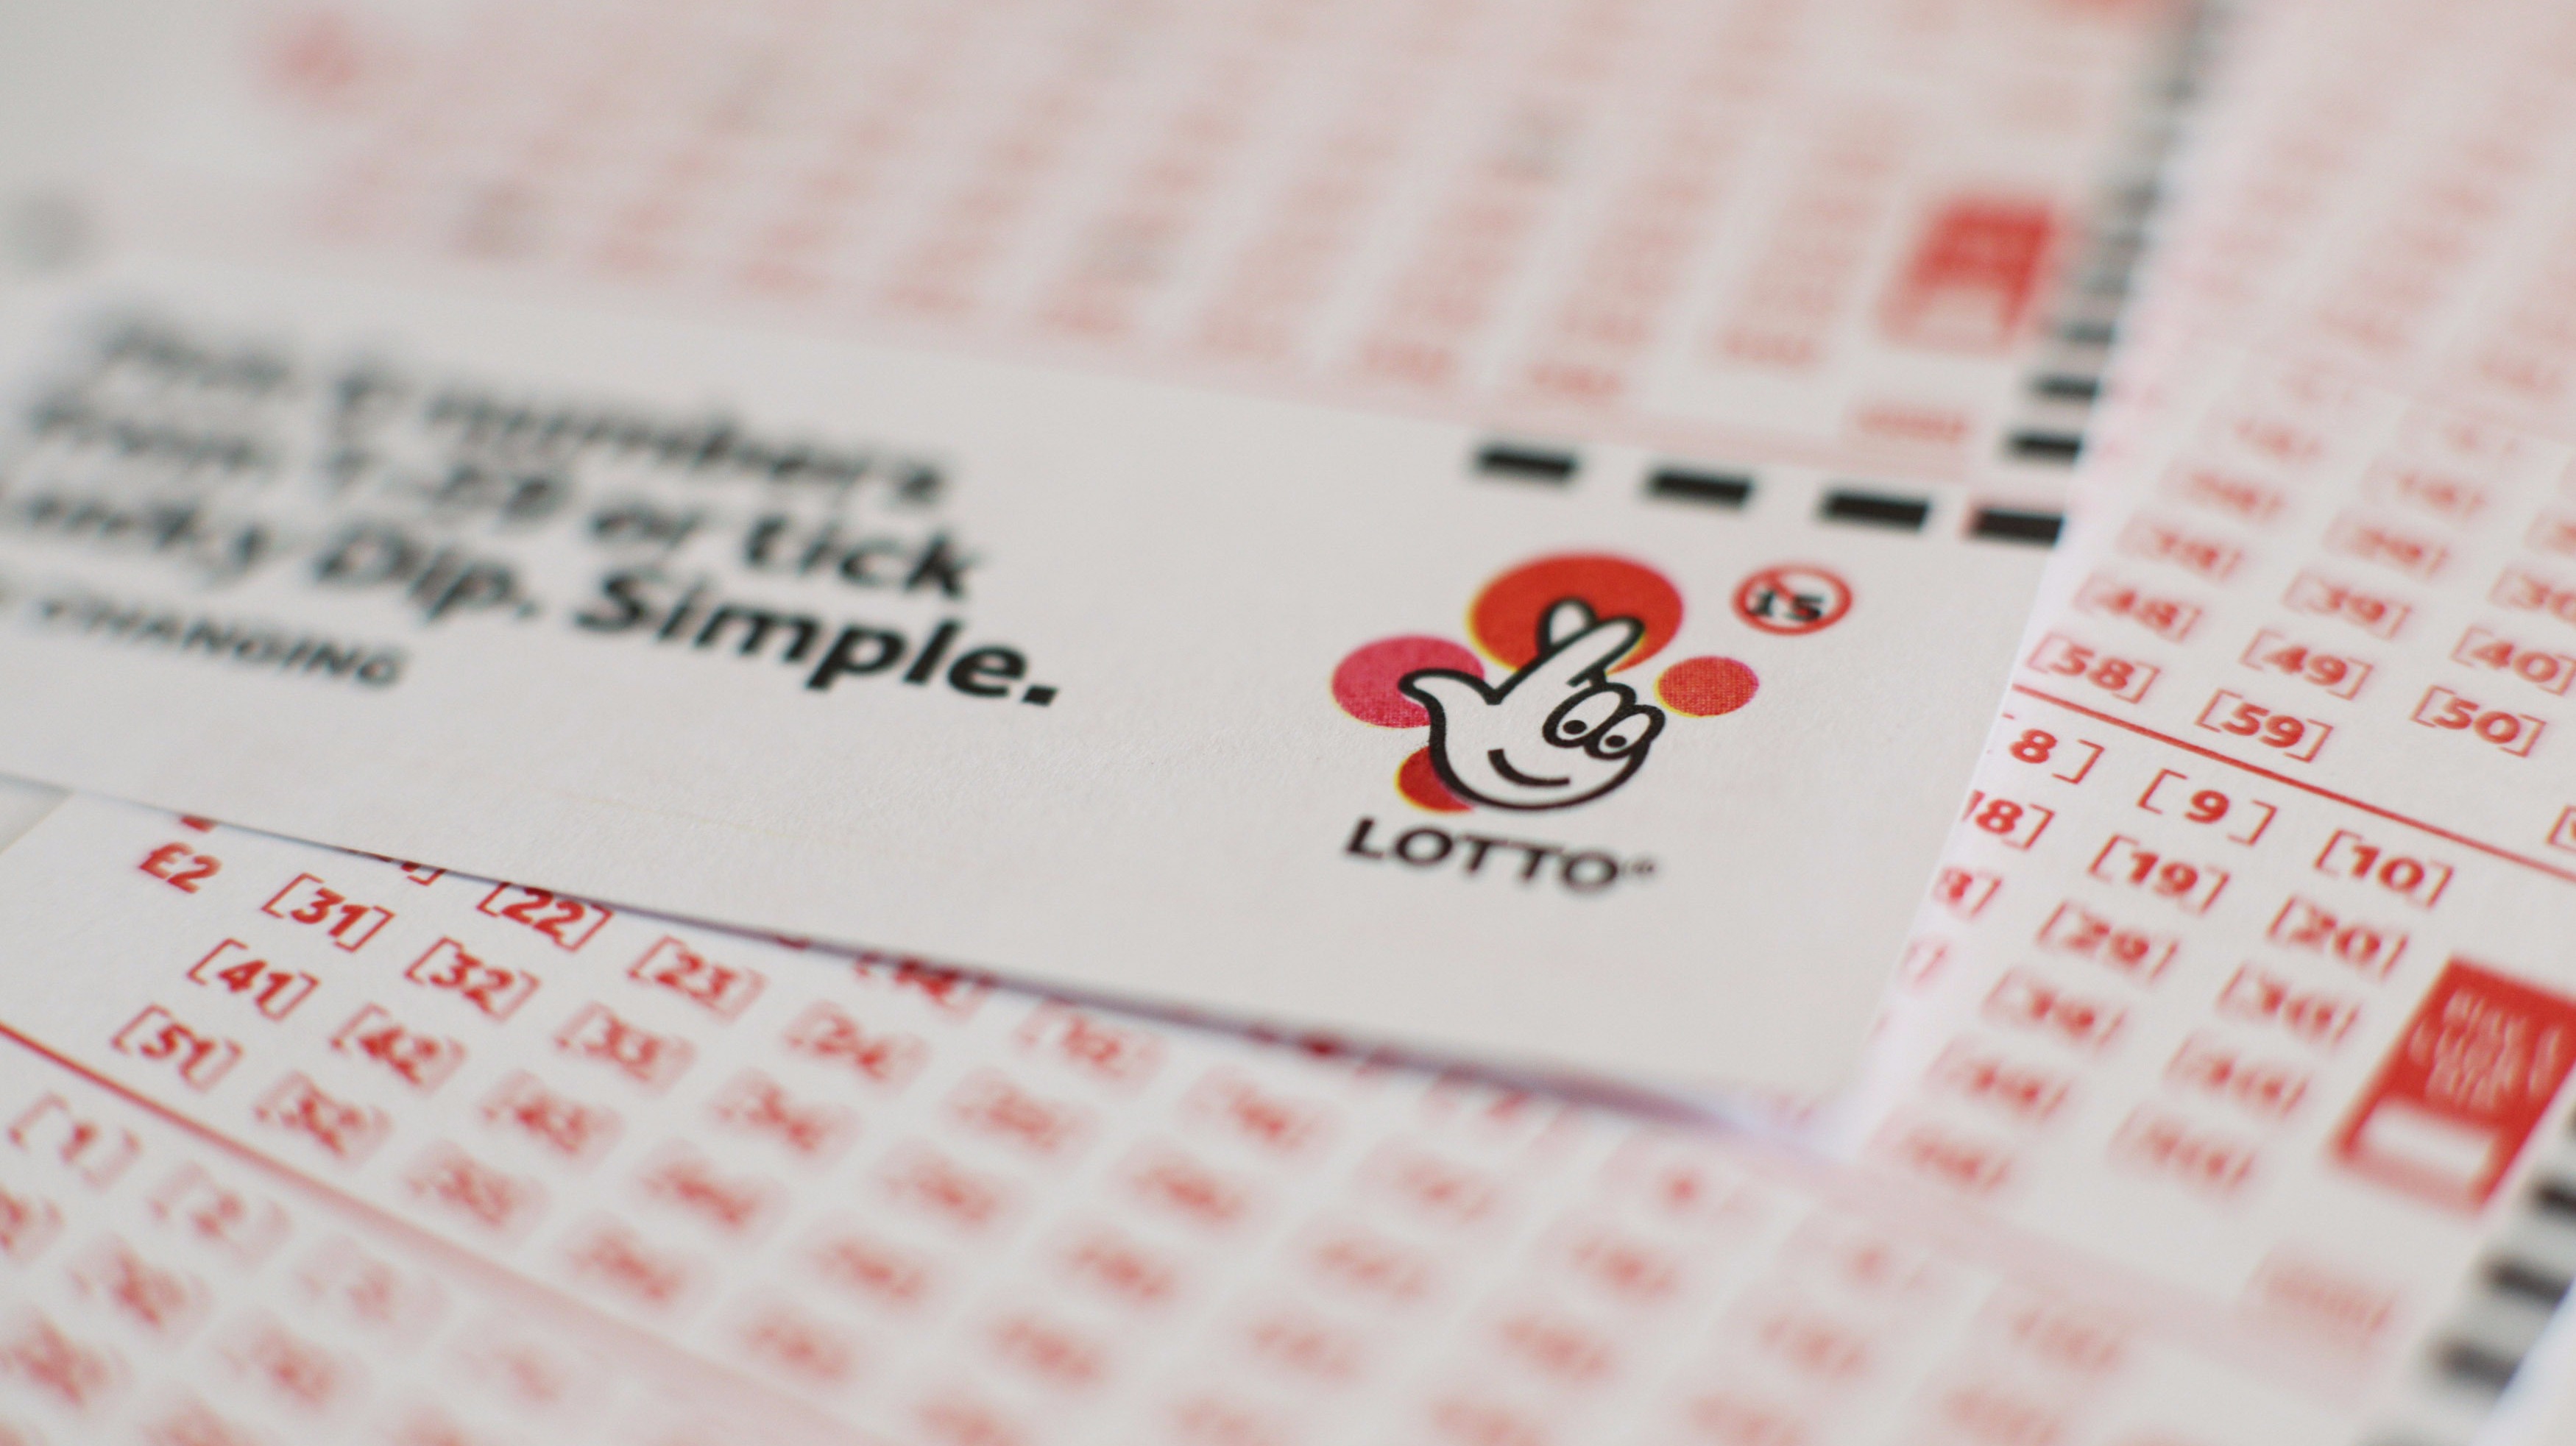 lotto hotpicks prize money